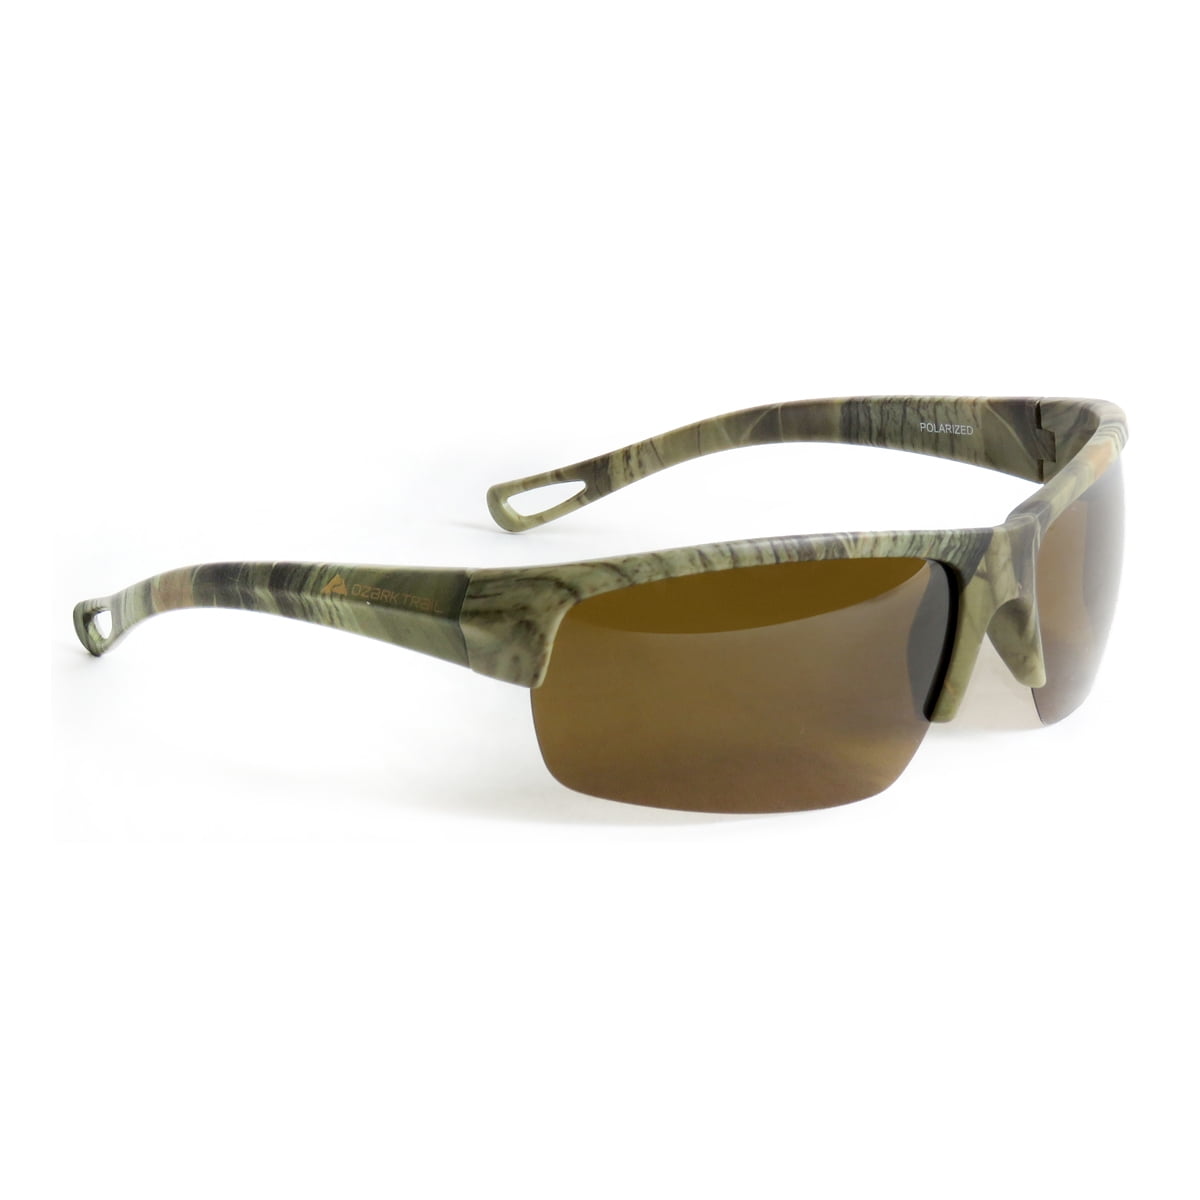 Camouflage lunettes de soleil polarized brown cat 3 objectifs UV400 